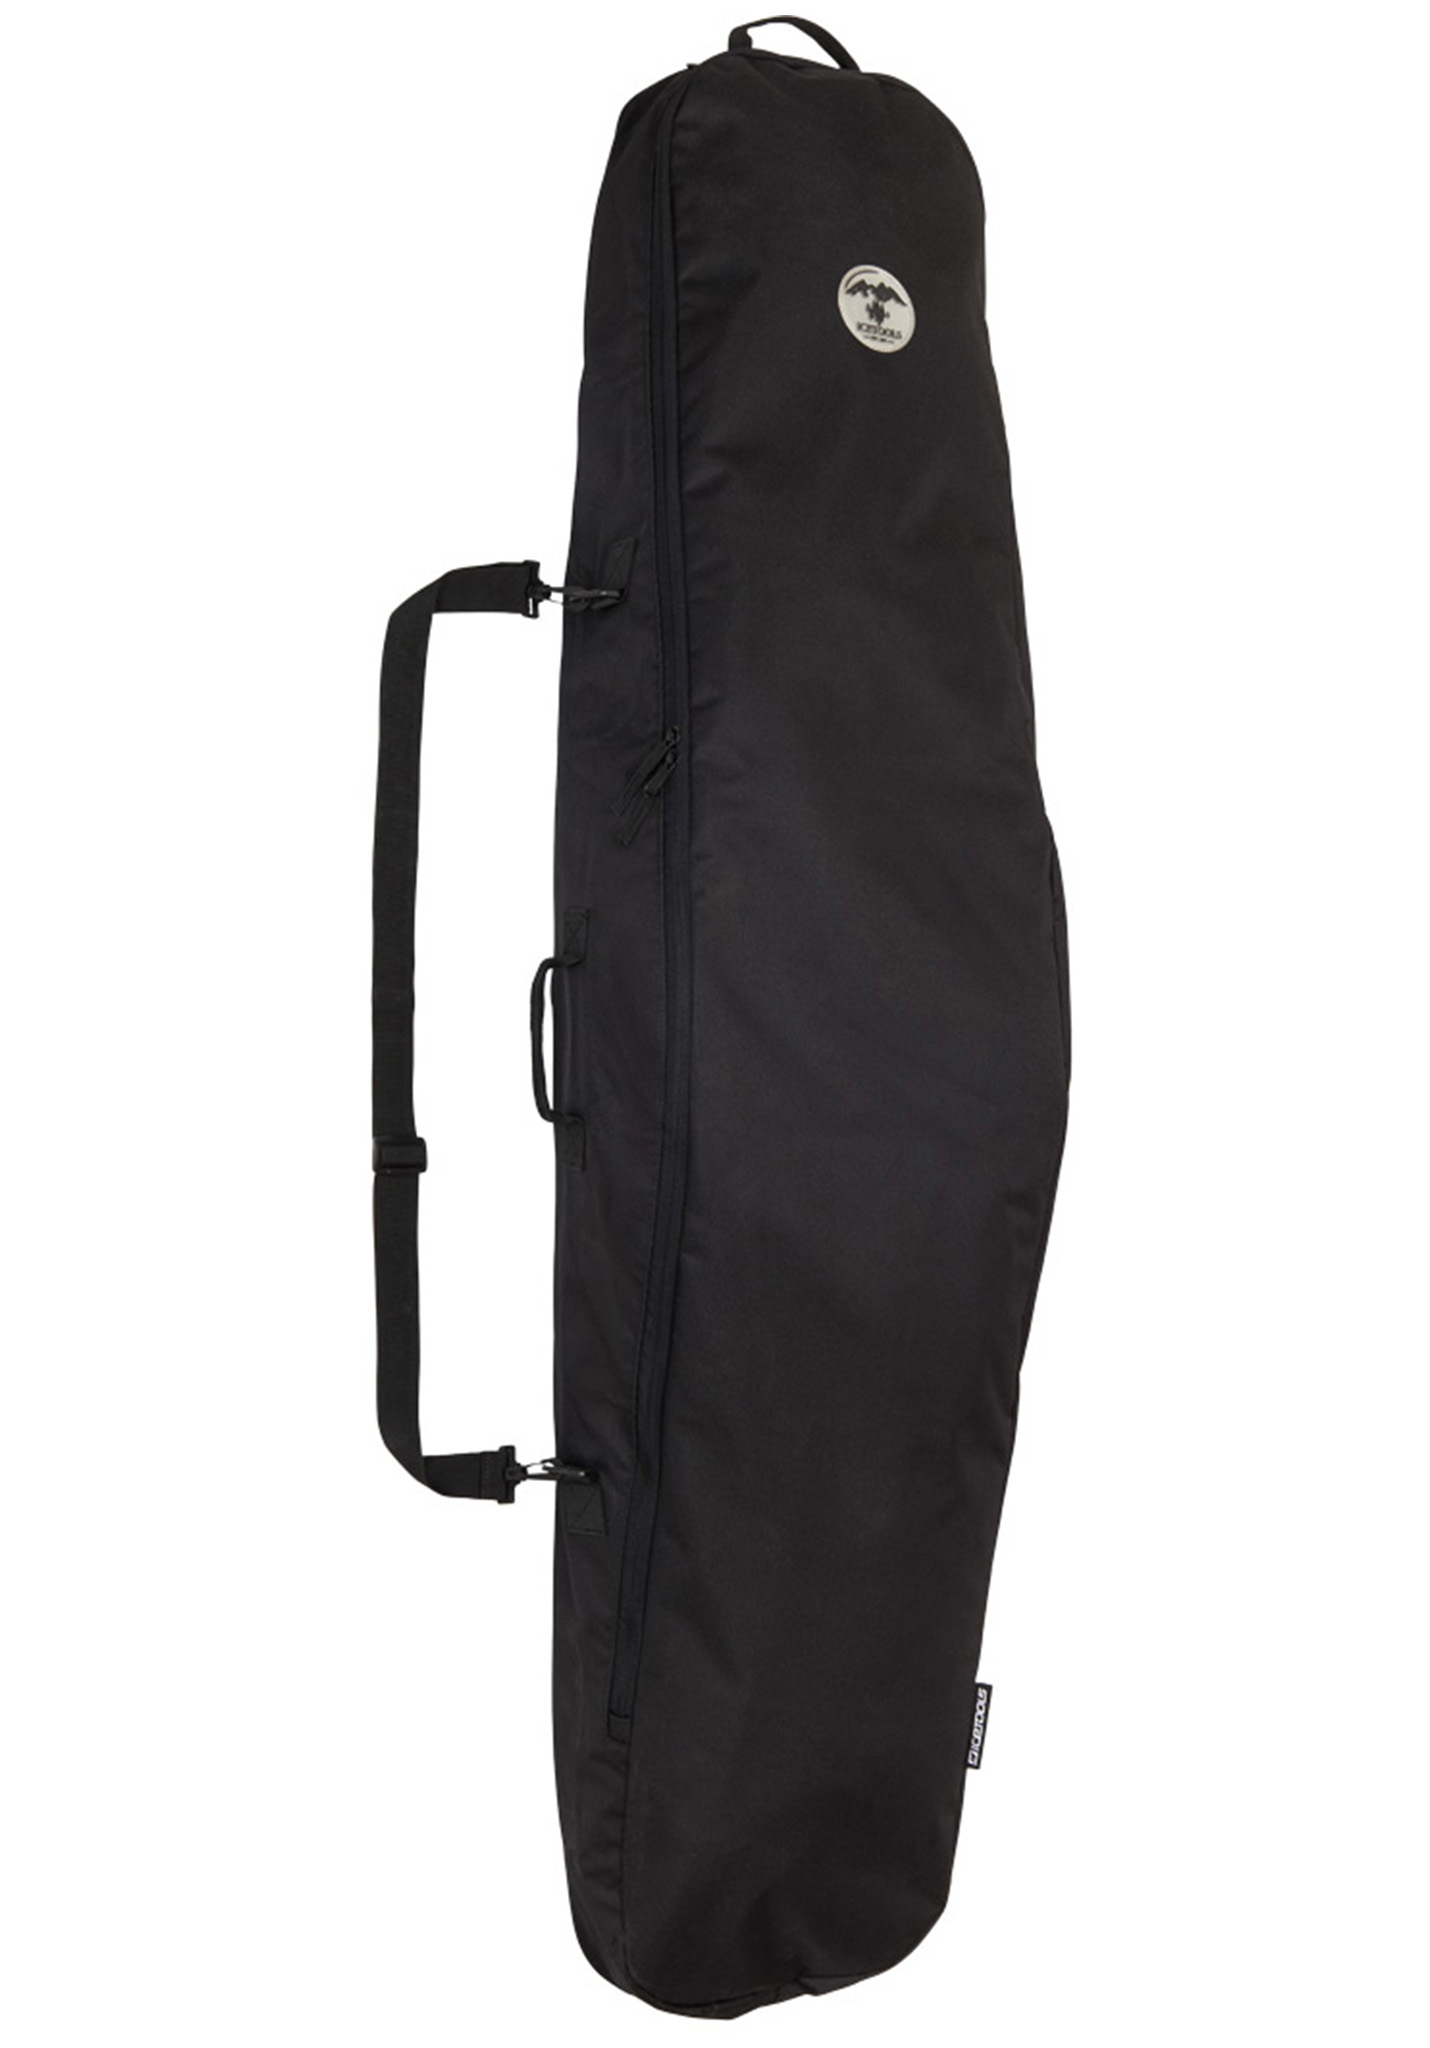 Icetools Board Jacket 165cm Surf Boardbags black One Size